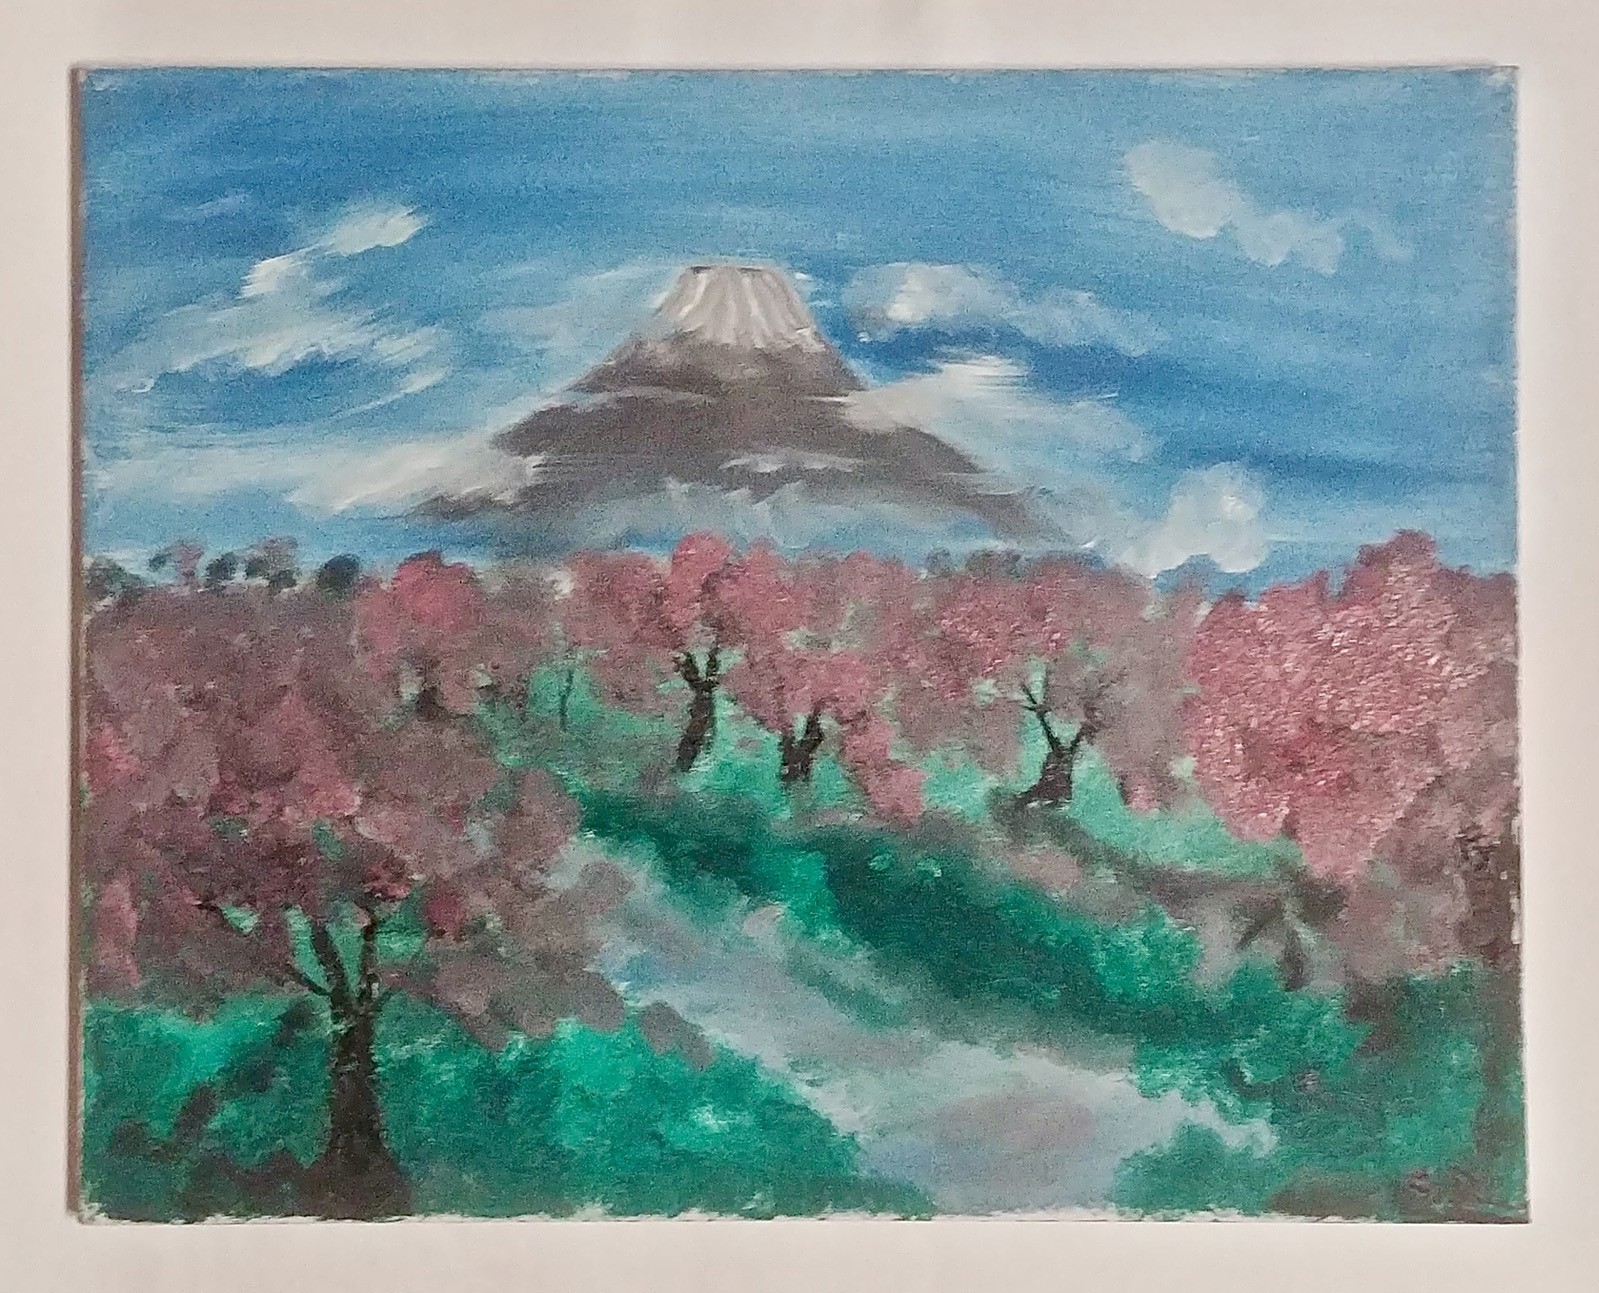 “Cherry Blossom” by Samuel Robinson, oil on canvas